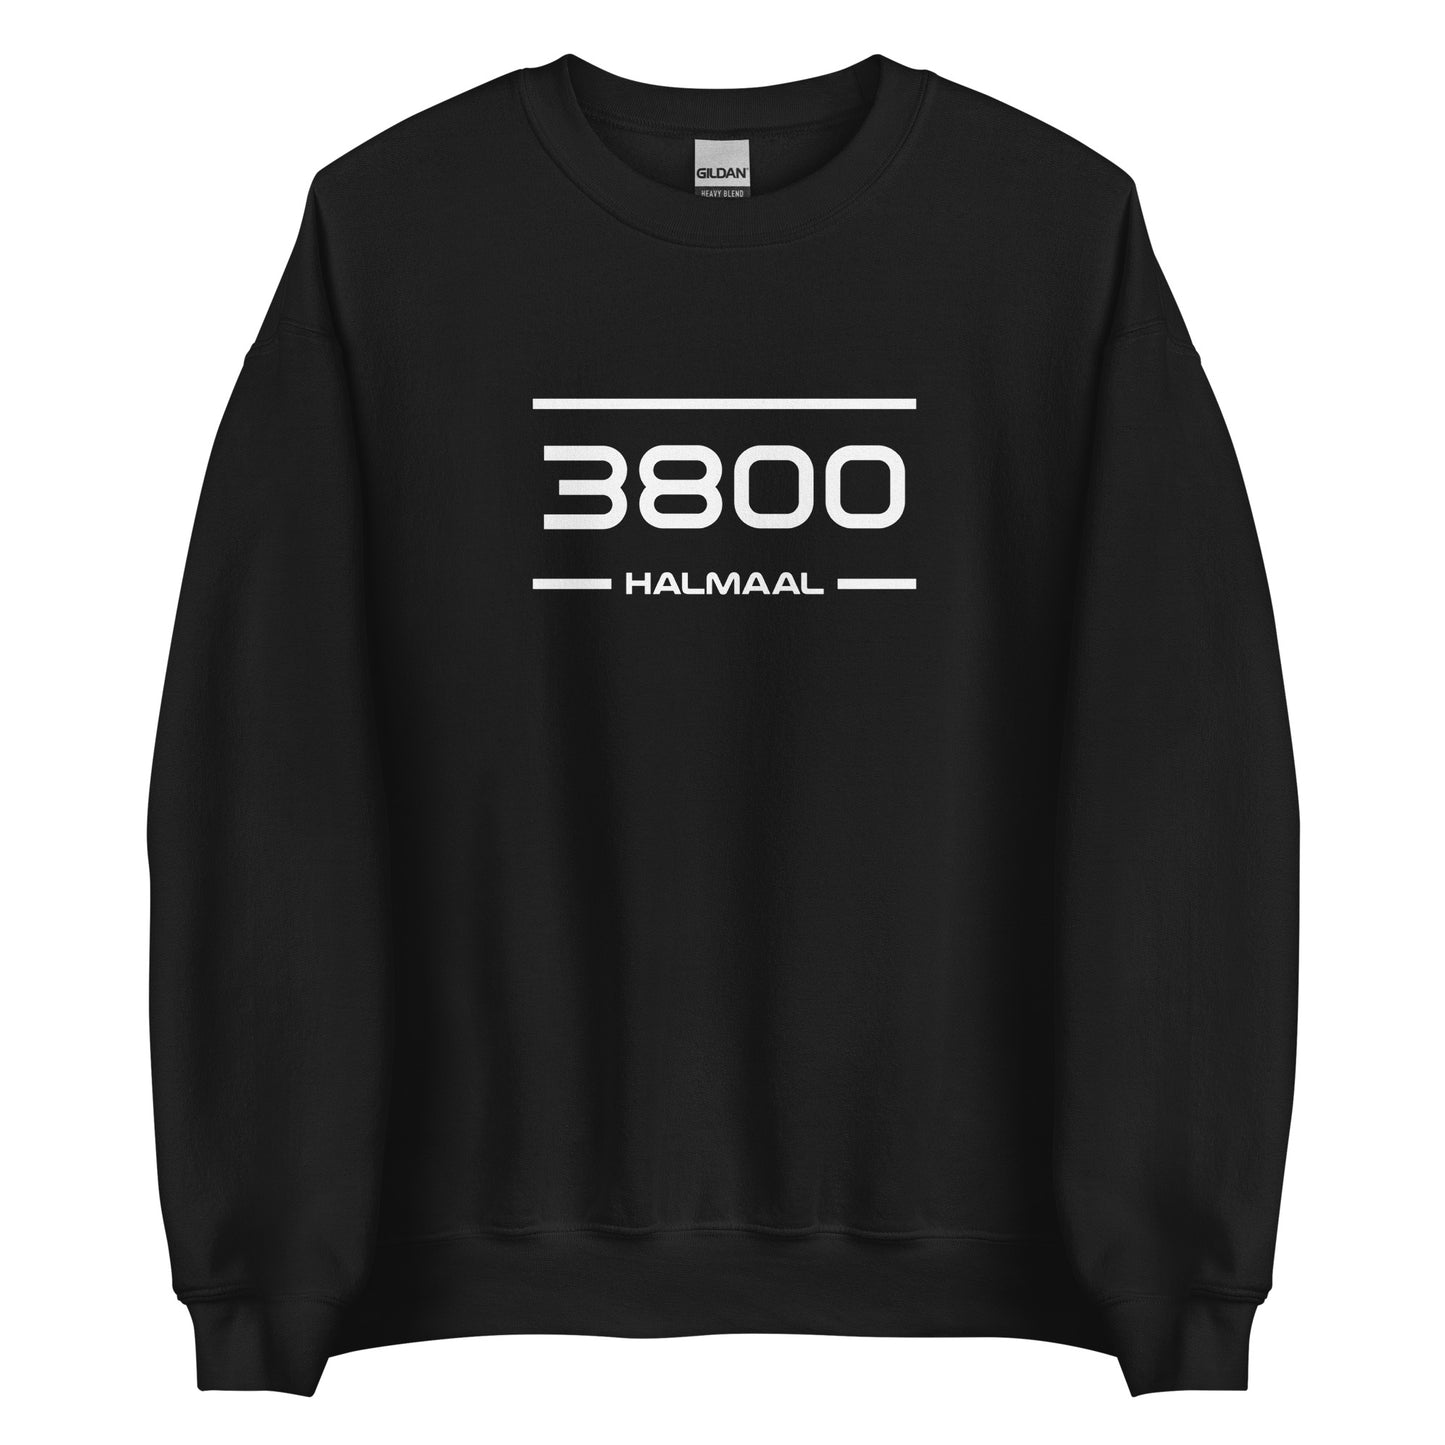 Sweater - 3800 - Halmaal (M/V)